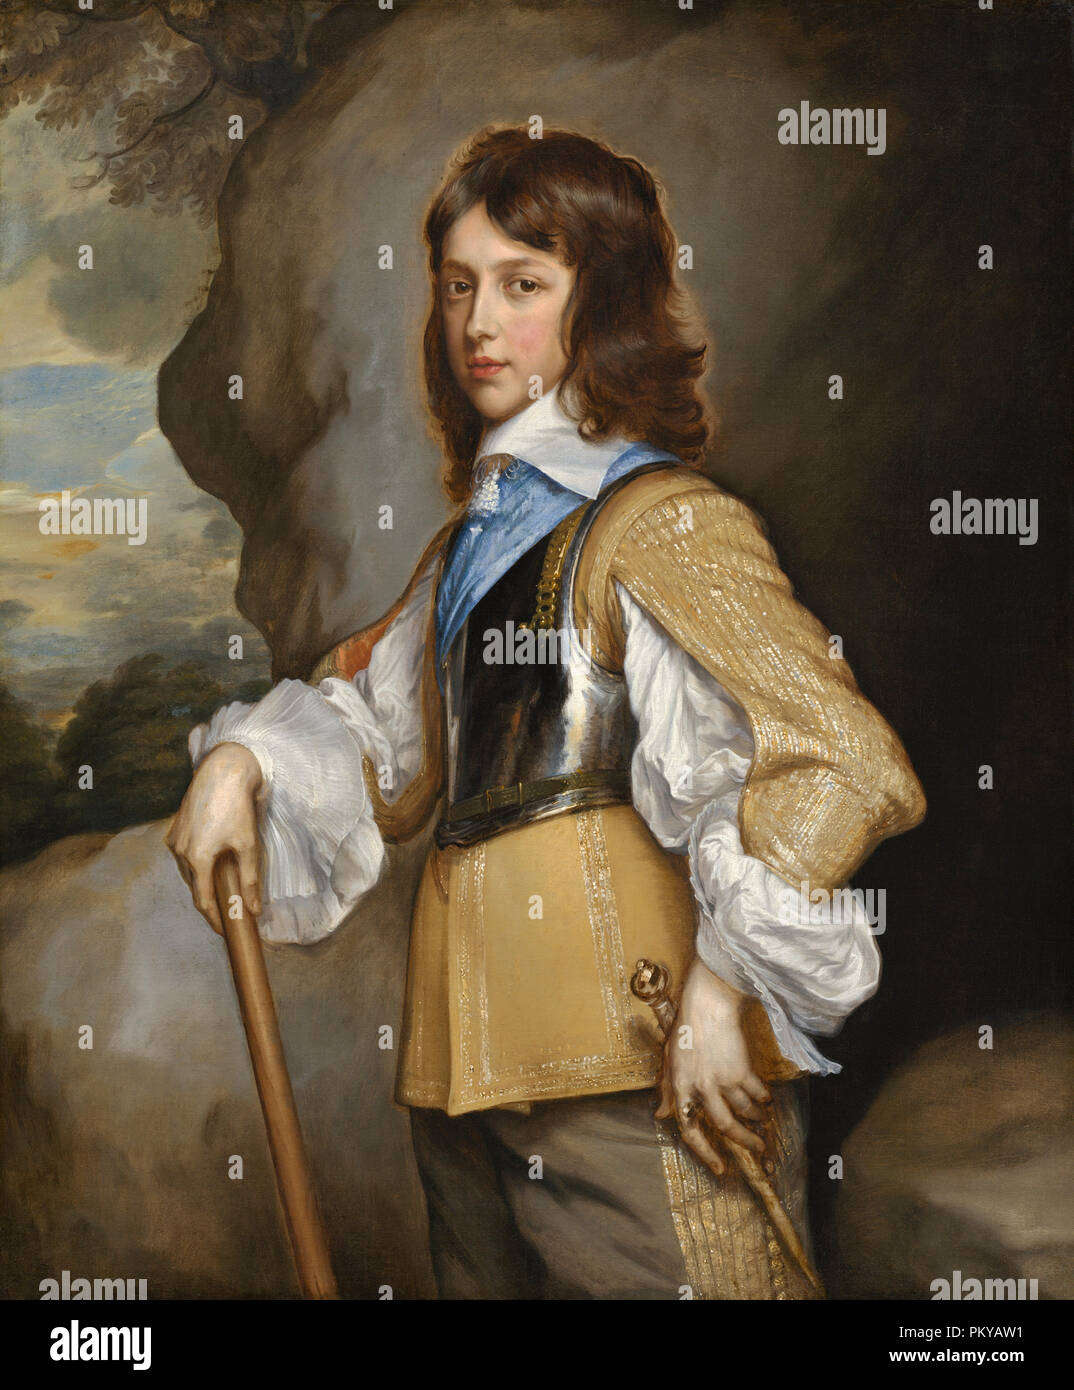 Henry, Duke of Gloucester. Dated: c. 1653. Dimensions: overall: 104.8 x 87 cm (41 1/4 x 34 1/4 in.)  framed: 128.91 x 111.13 x 11.43 cm (50 3/4 x 43 3/4 x 4 1/2 in.). Medium: oil on canvas. Museum: National Gallery of Art, Washington DC. Author: Adriaen Hanneman. Stock Photo